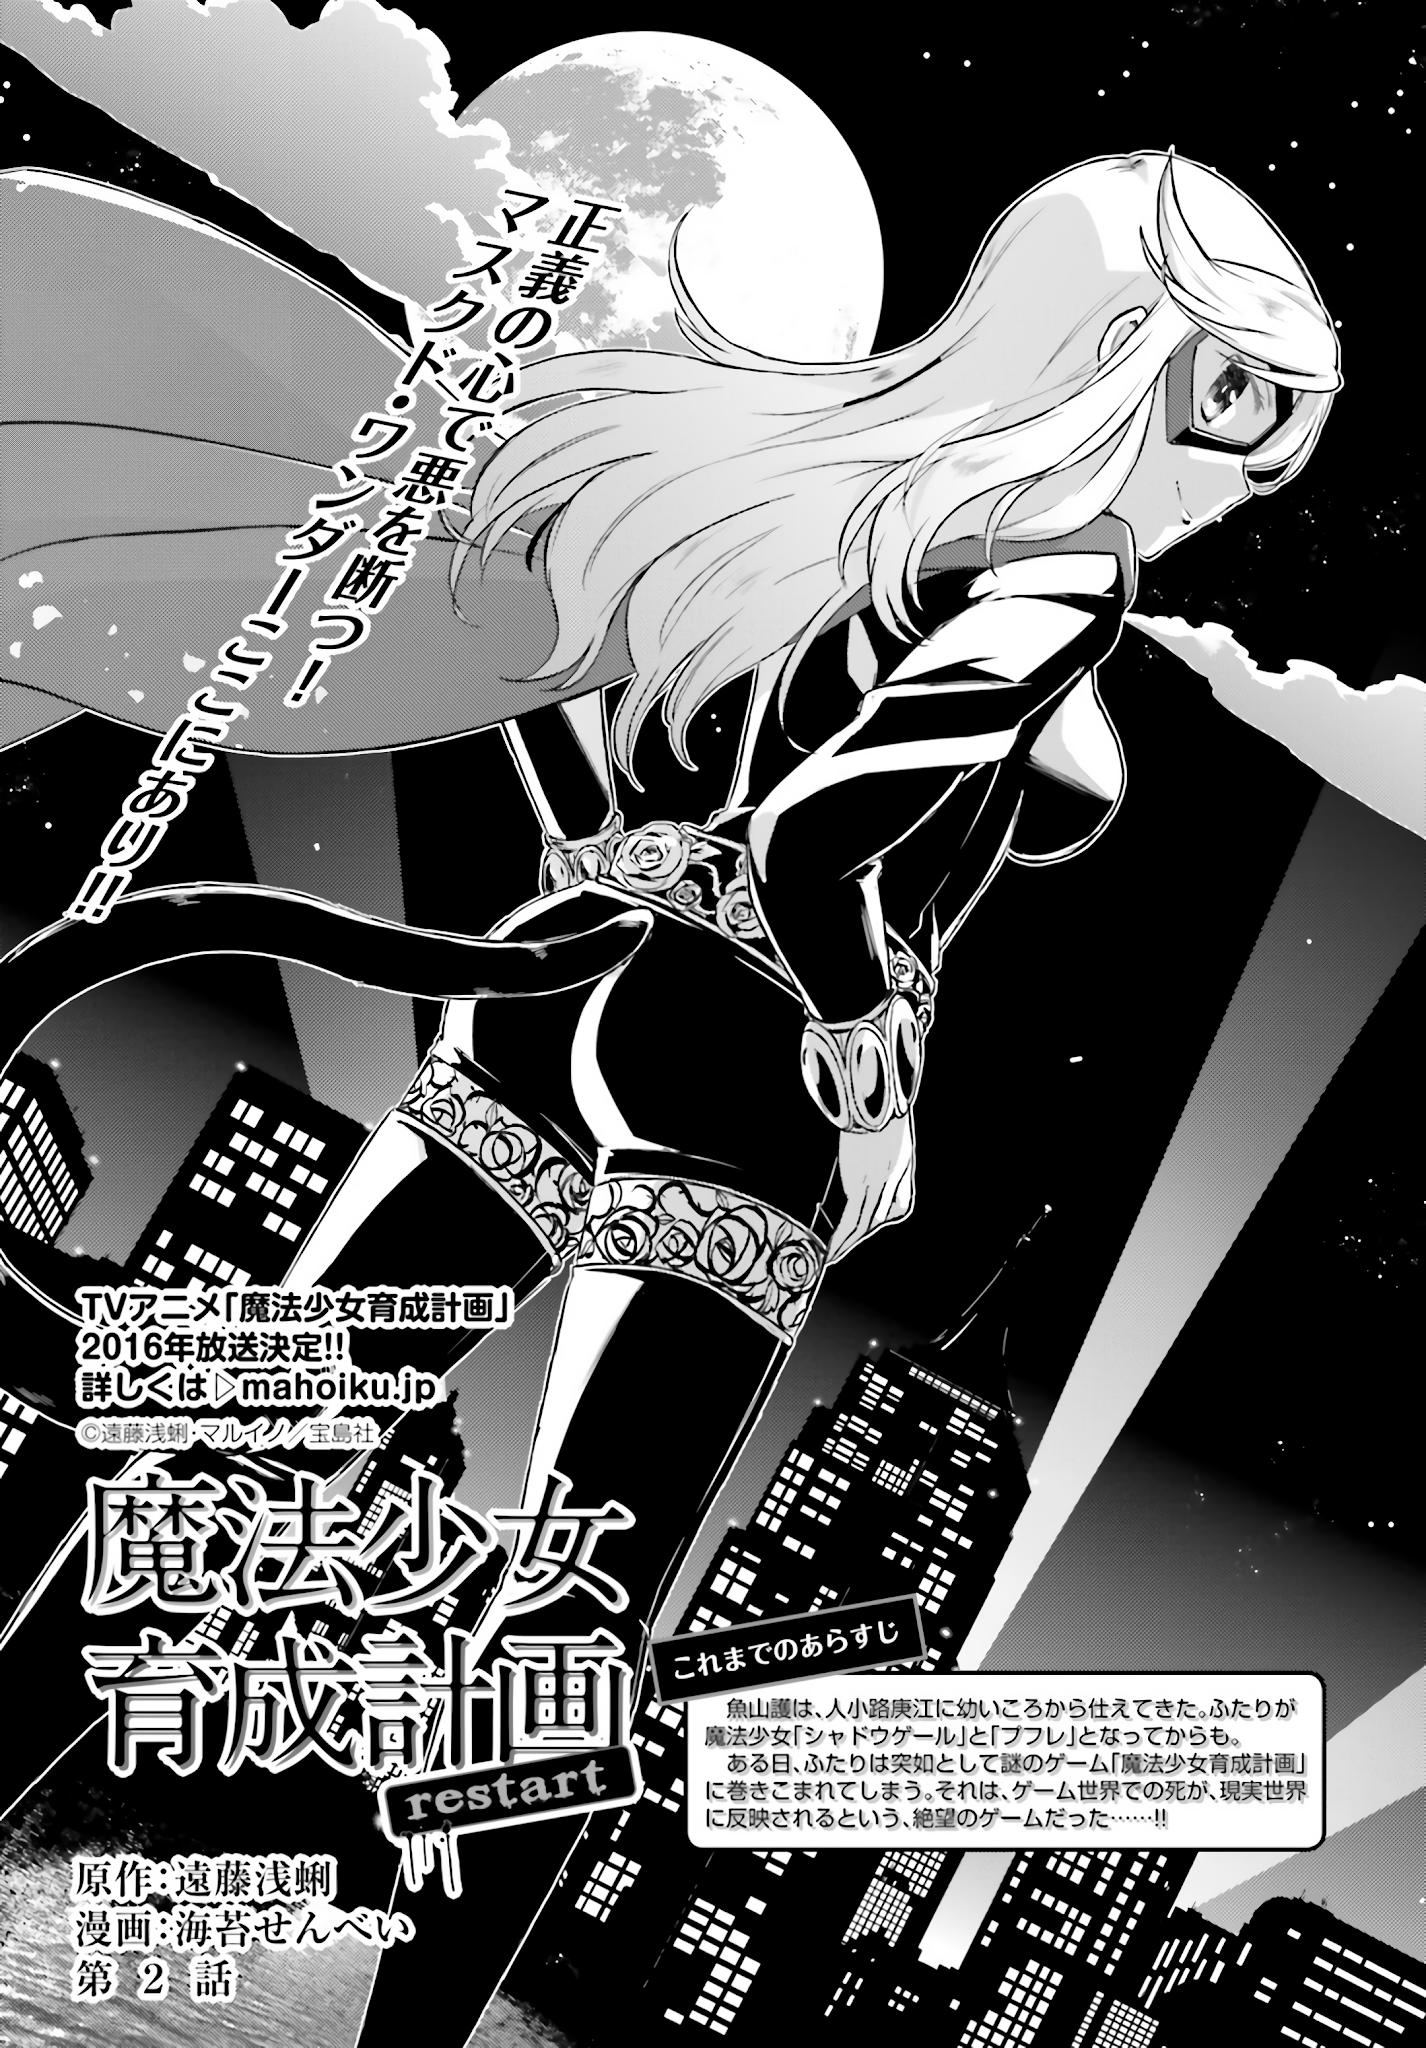 Magical Girl Raising Project — Mahou Shoujo Ikusei Keikaku: Restart manga  